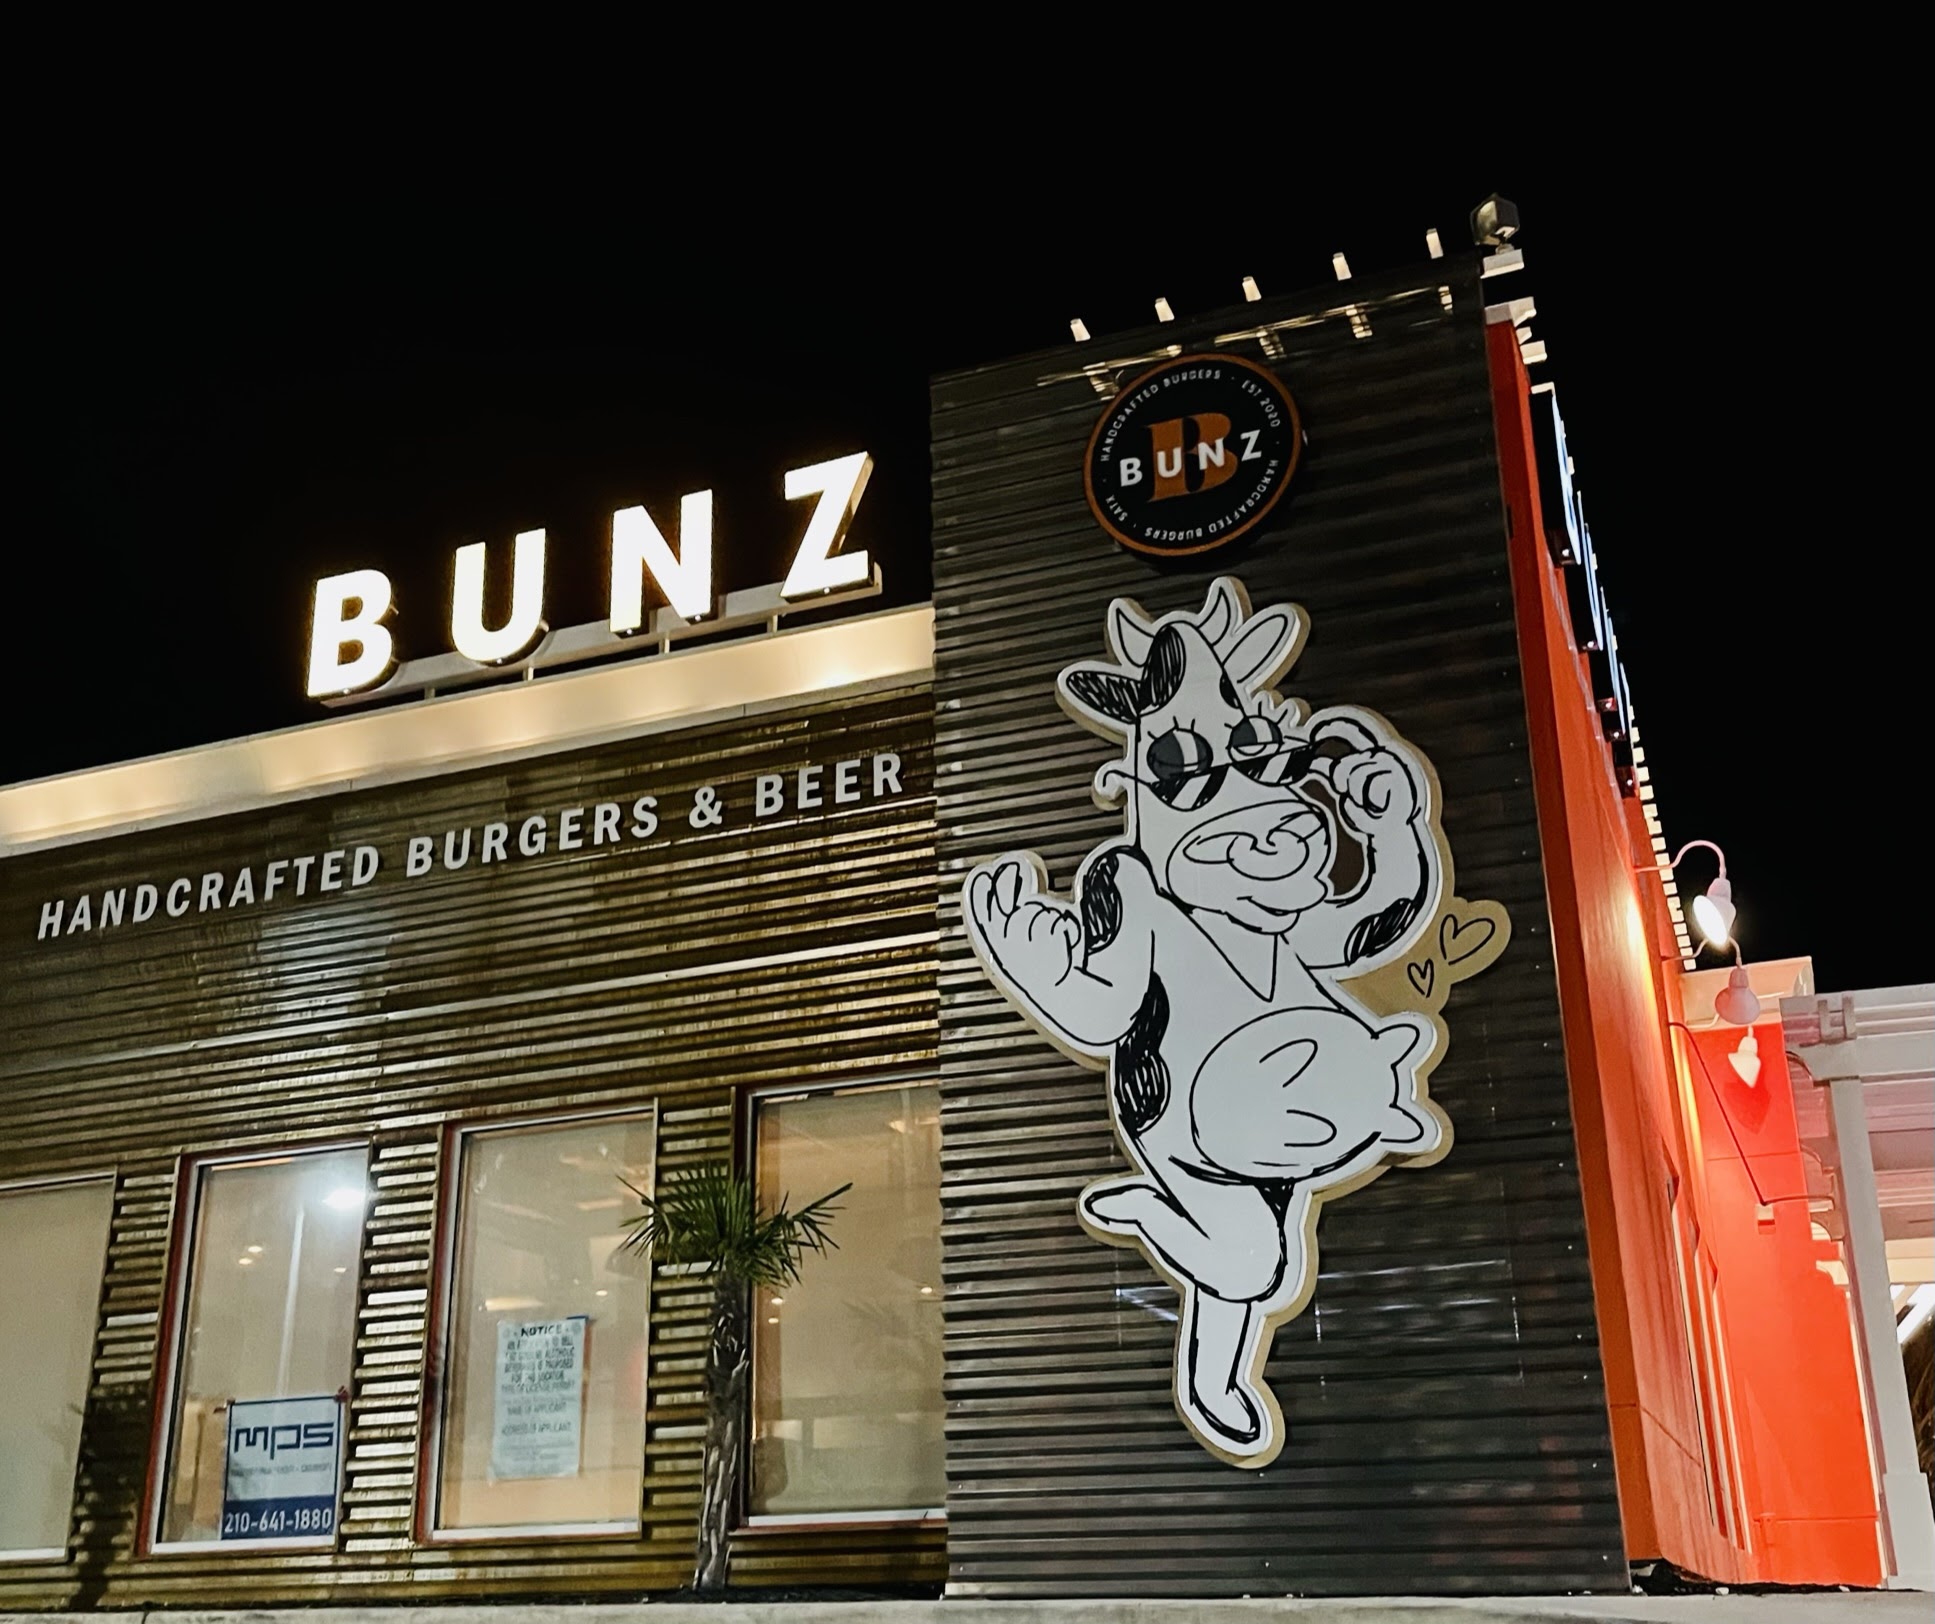 Bunz Handcrafted Burgers